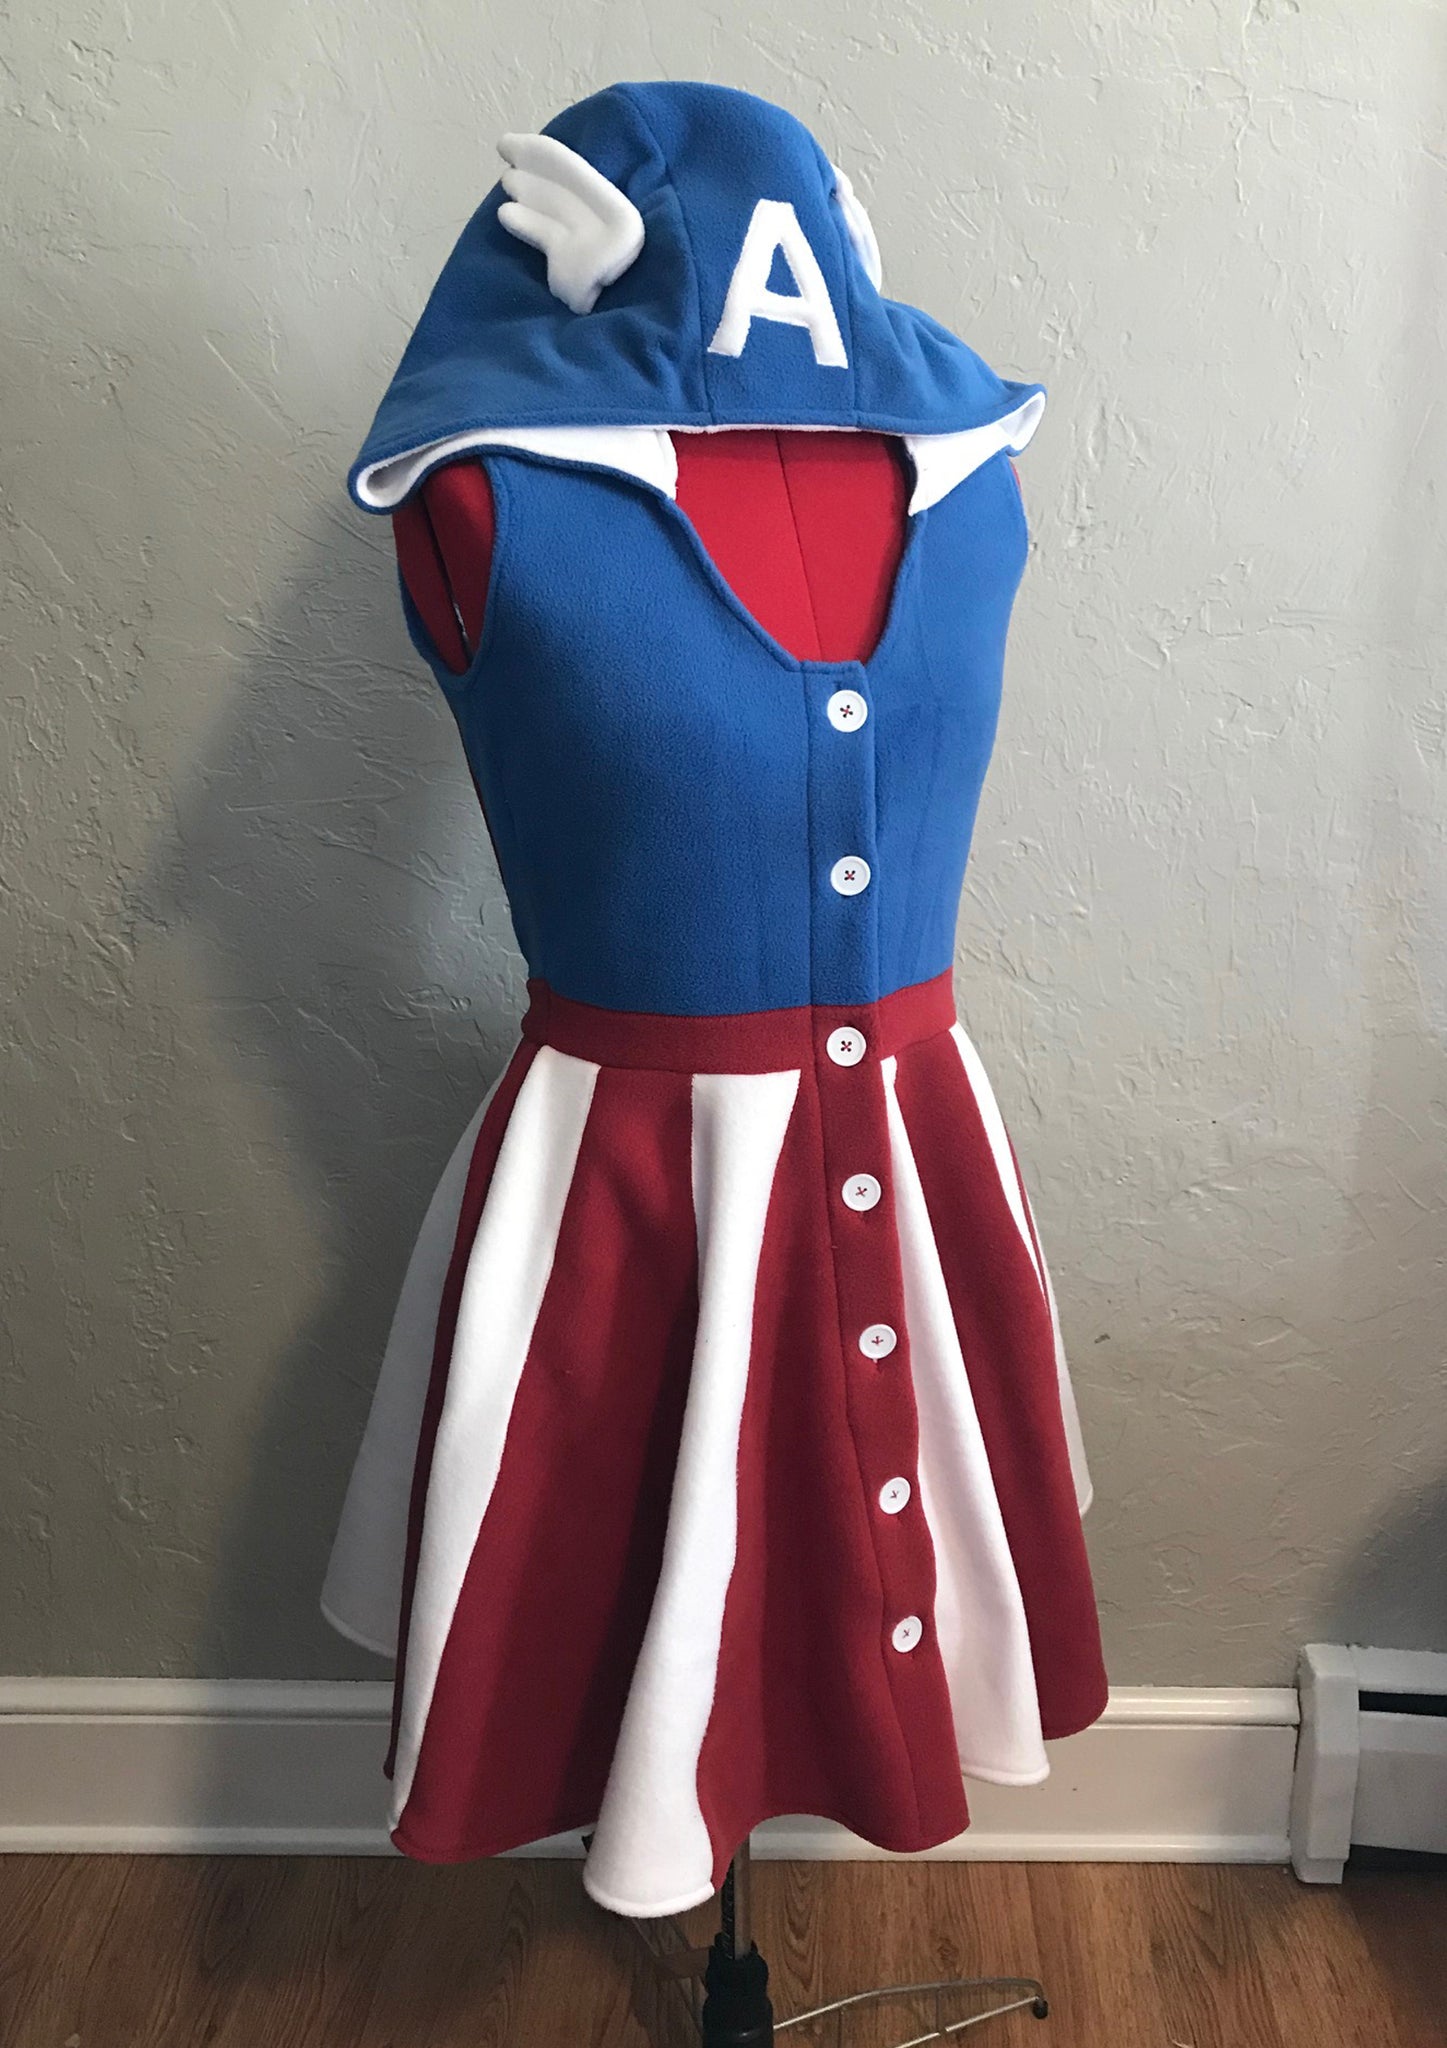 Captain America Inspired Kigurumi Dress